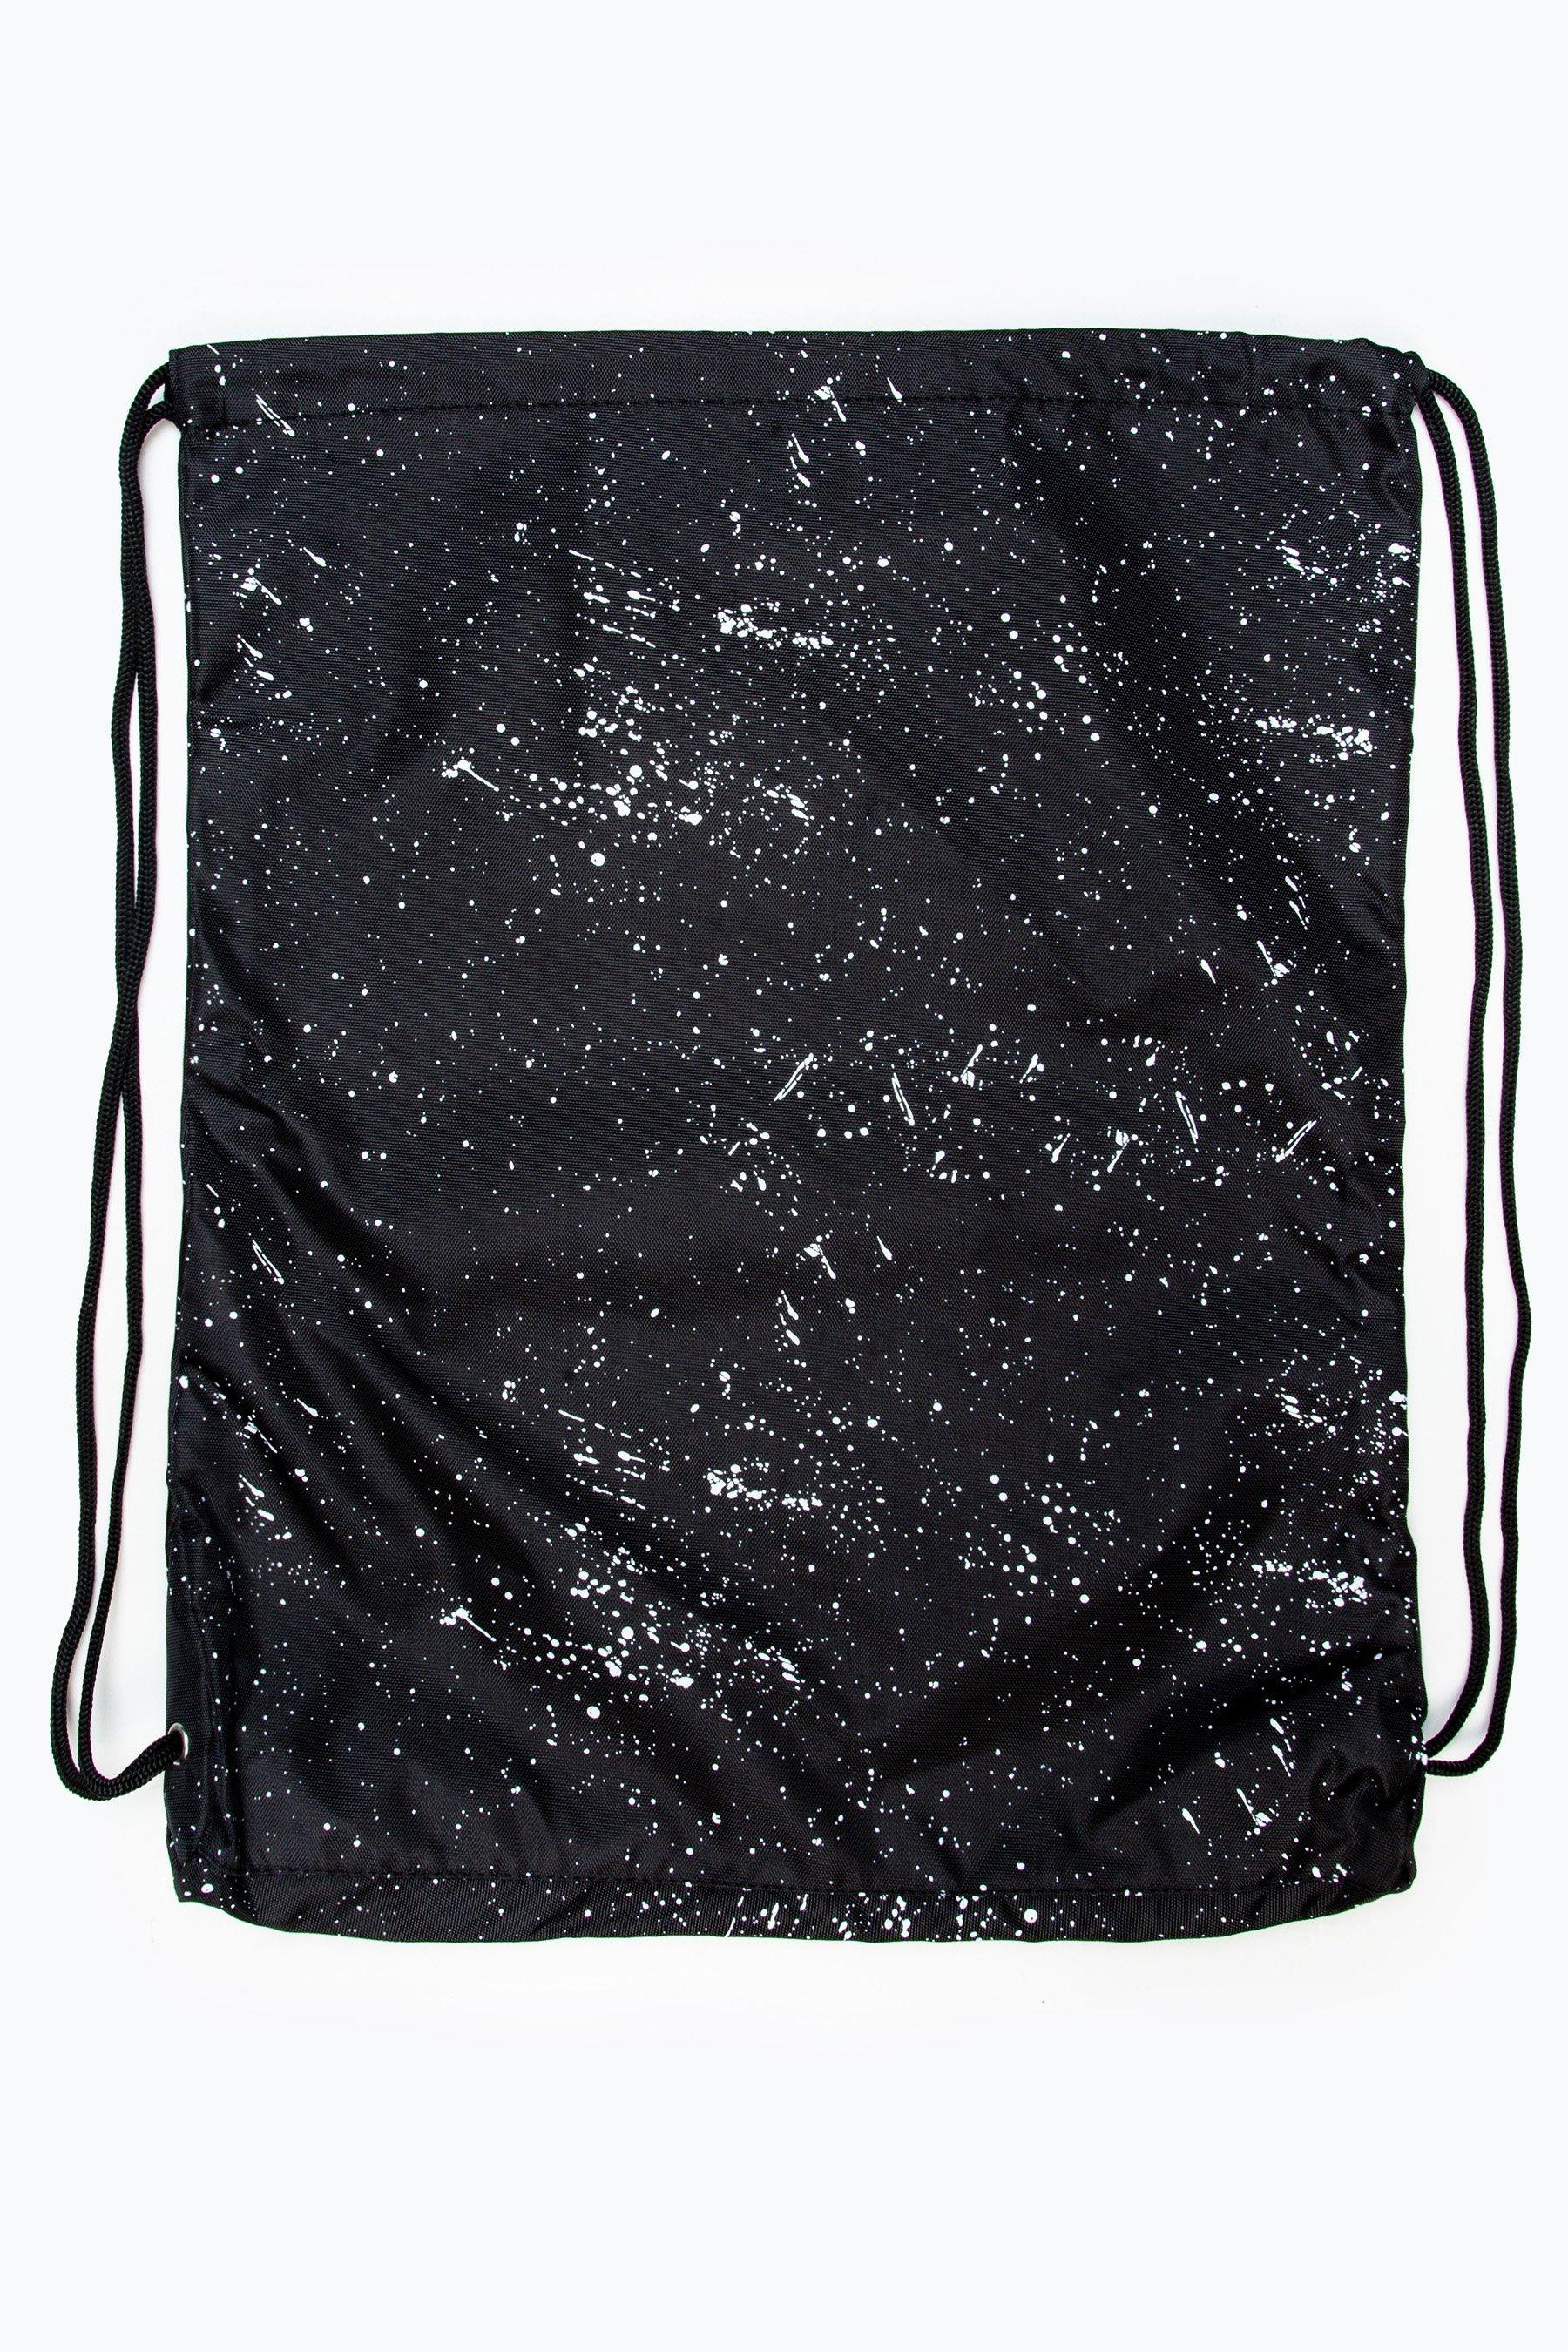 OHS Plain Drawstring Makeup Bag Organiser, Black - One Size